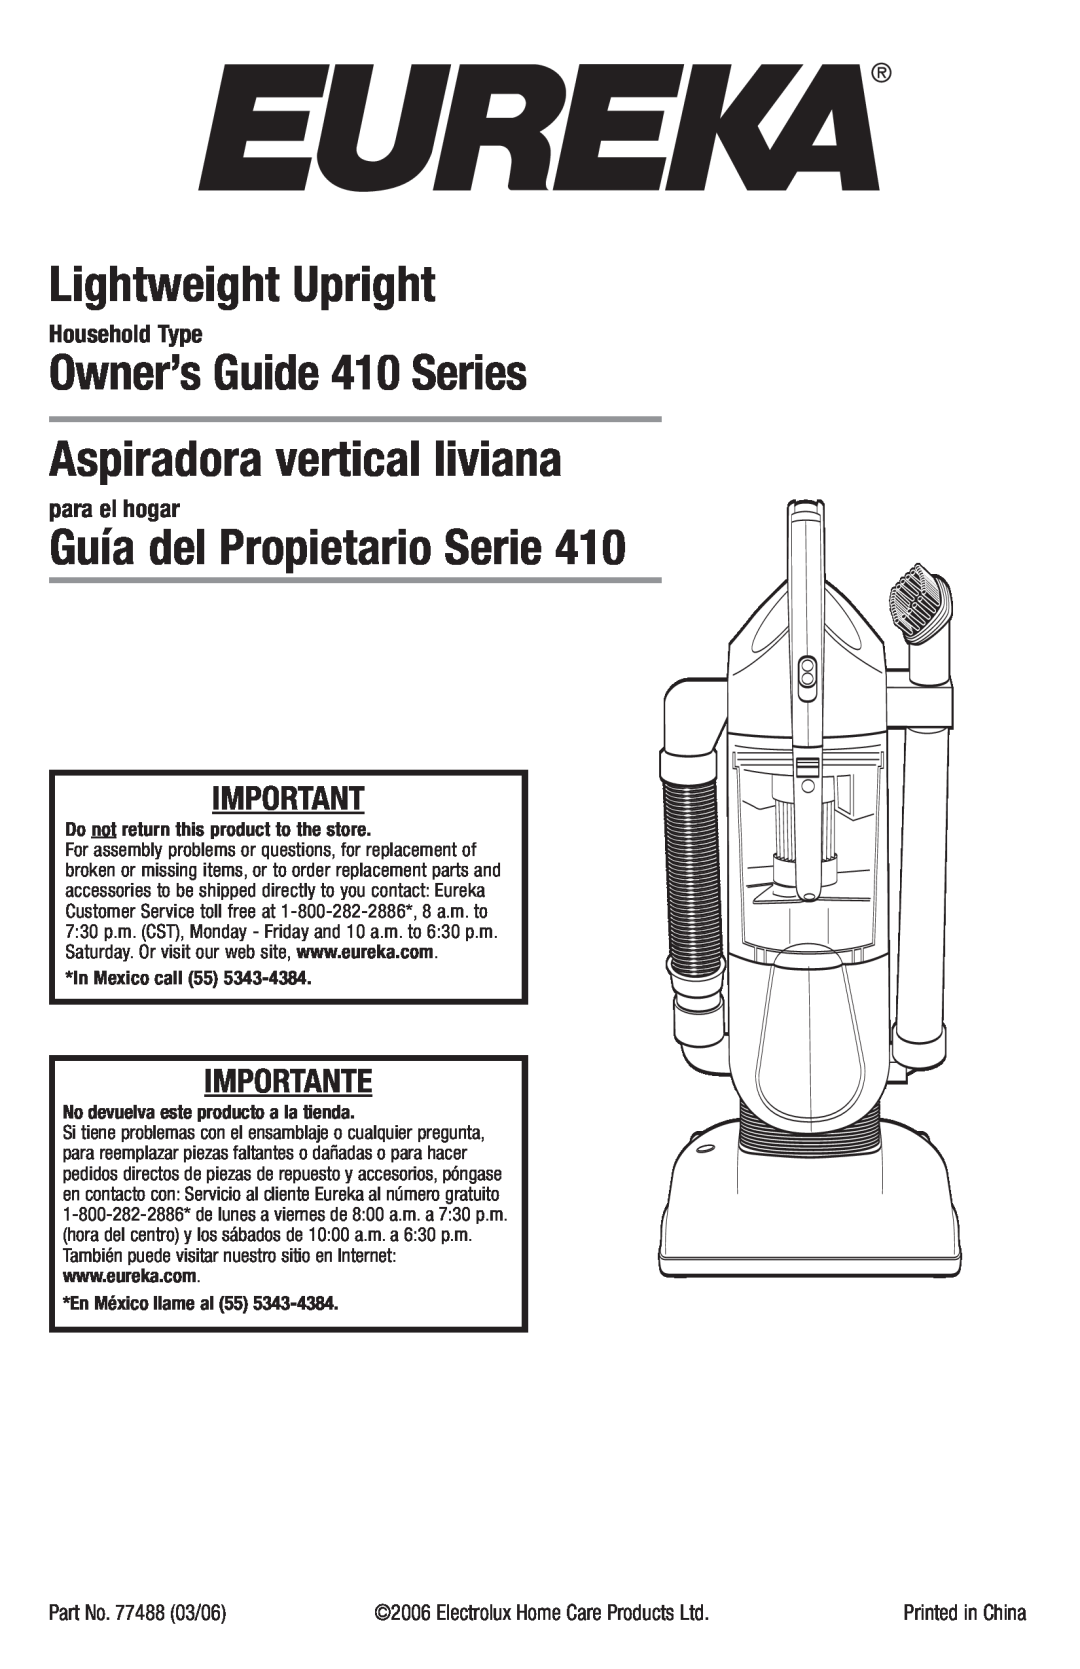 Eureka manual Household Type, para el hogar, Lightweight Upright, Owner’s Guide 410 Series Aspiradora vertical liviana 